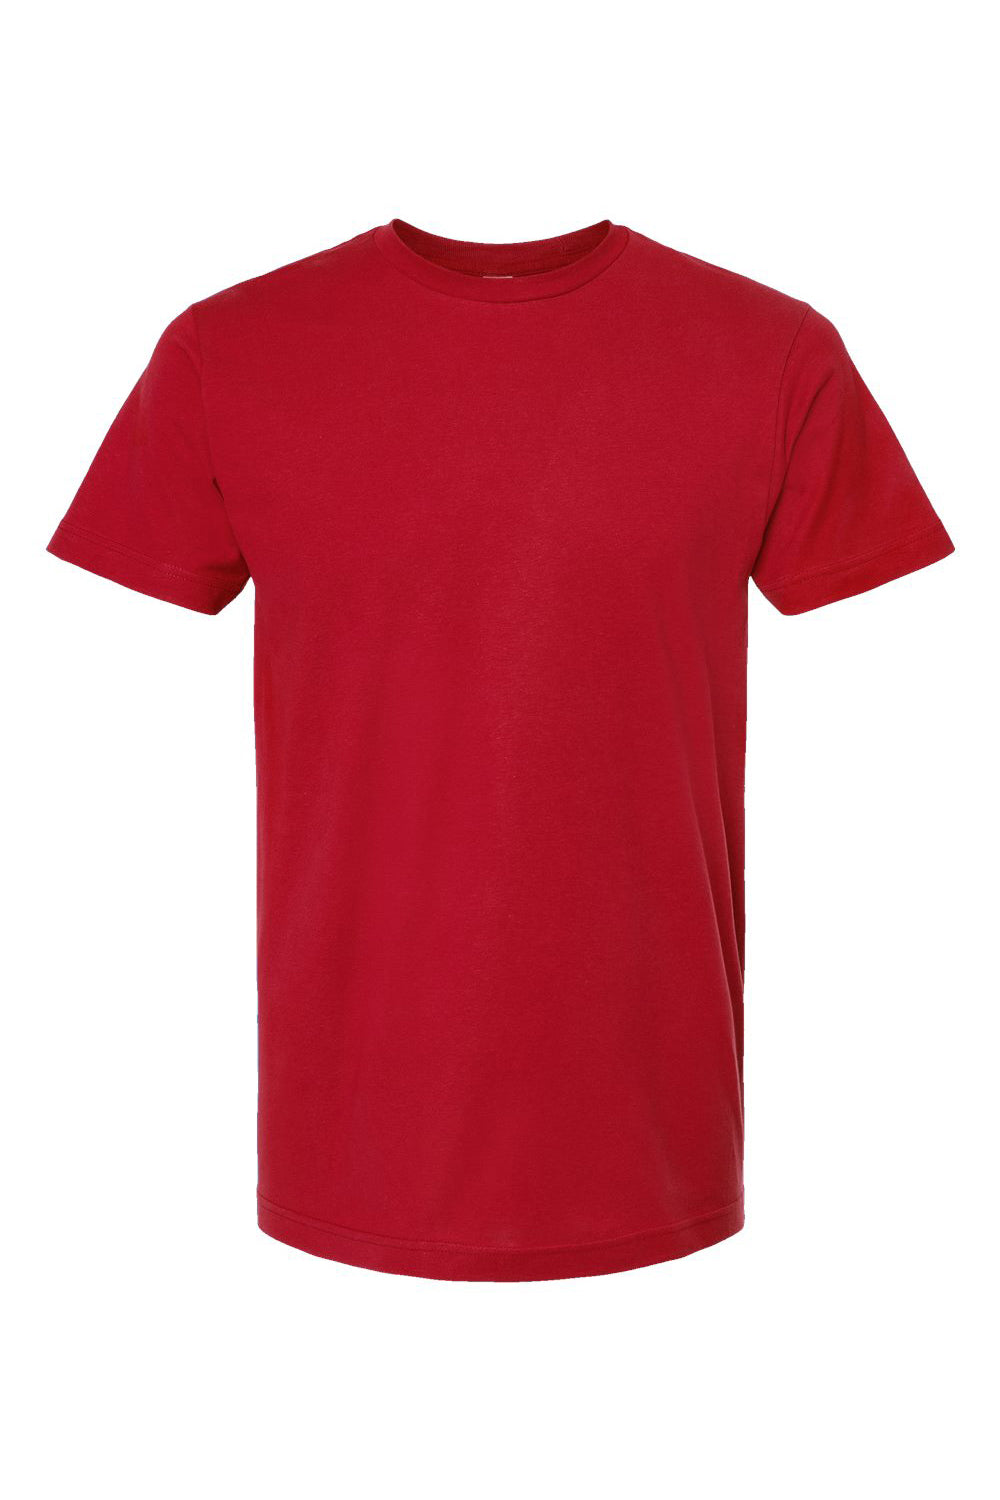 Tultex 202 Mens Fine Jersey Short Sleeve Crewneck T-Shirt Cardinal Red Flat Front